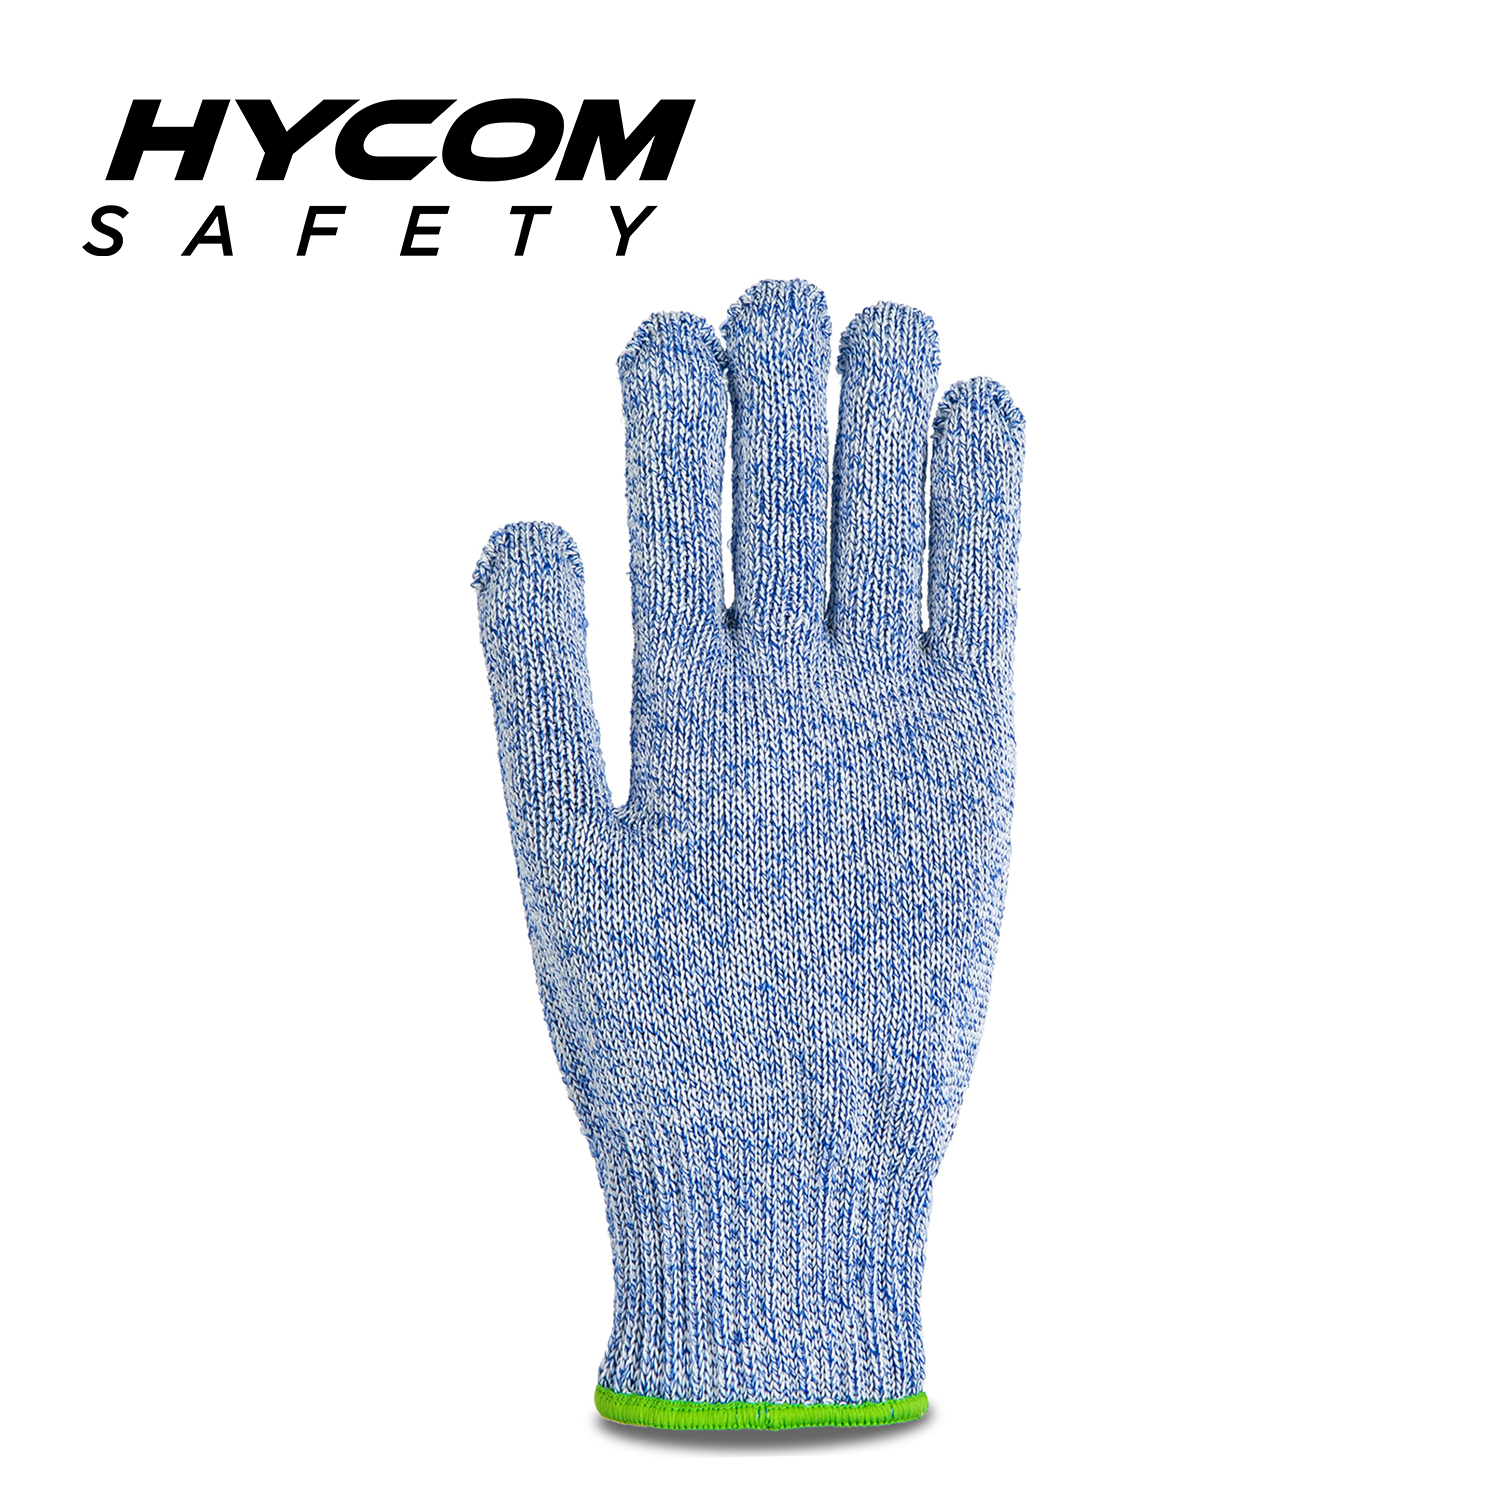 HYCOM 10G ANSI 7 HPPE Schnittfester Handschuh FDA Lebensmittelkontakt direkt Metzgerhandschuh